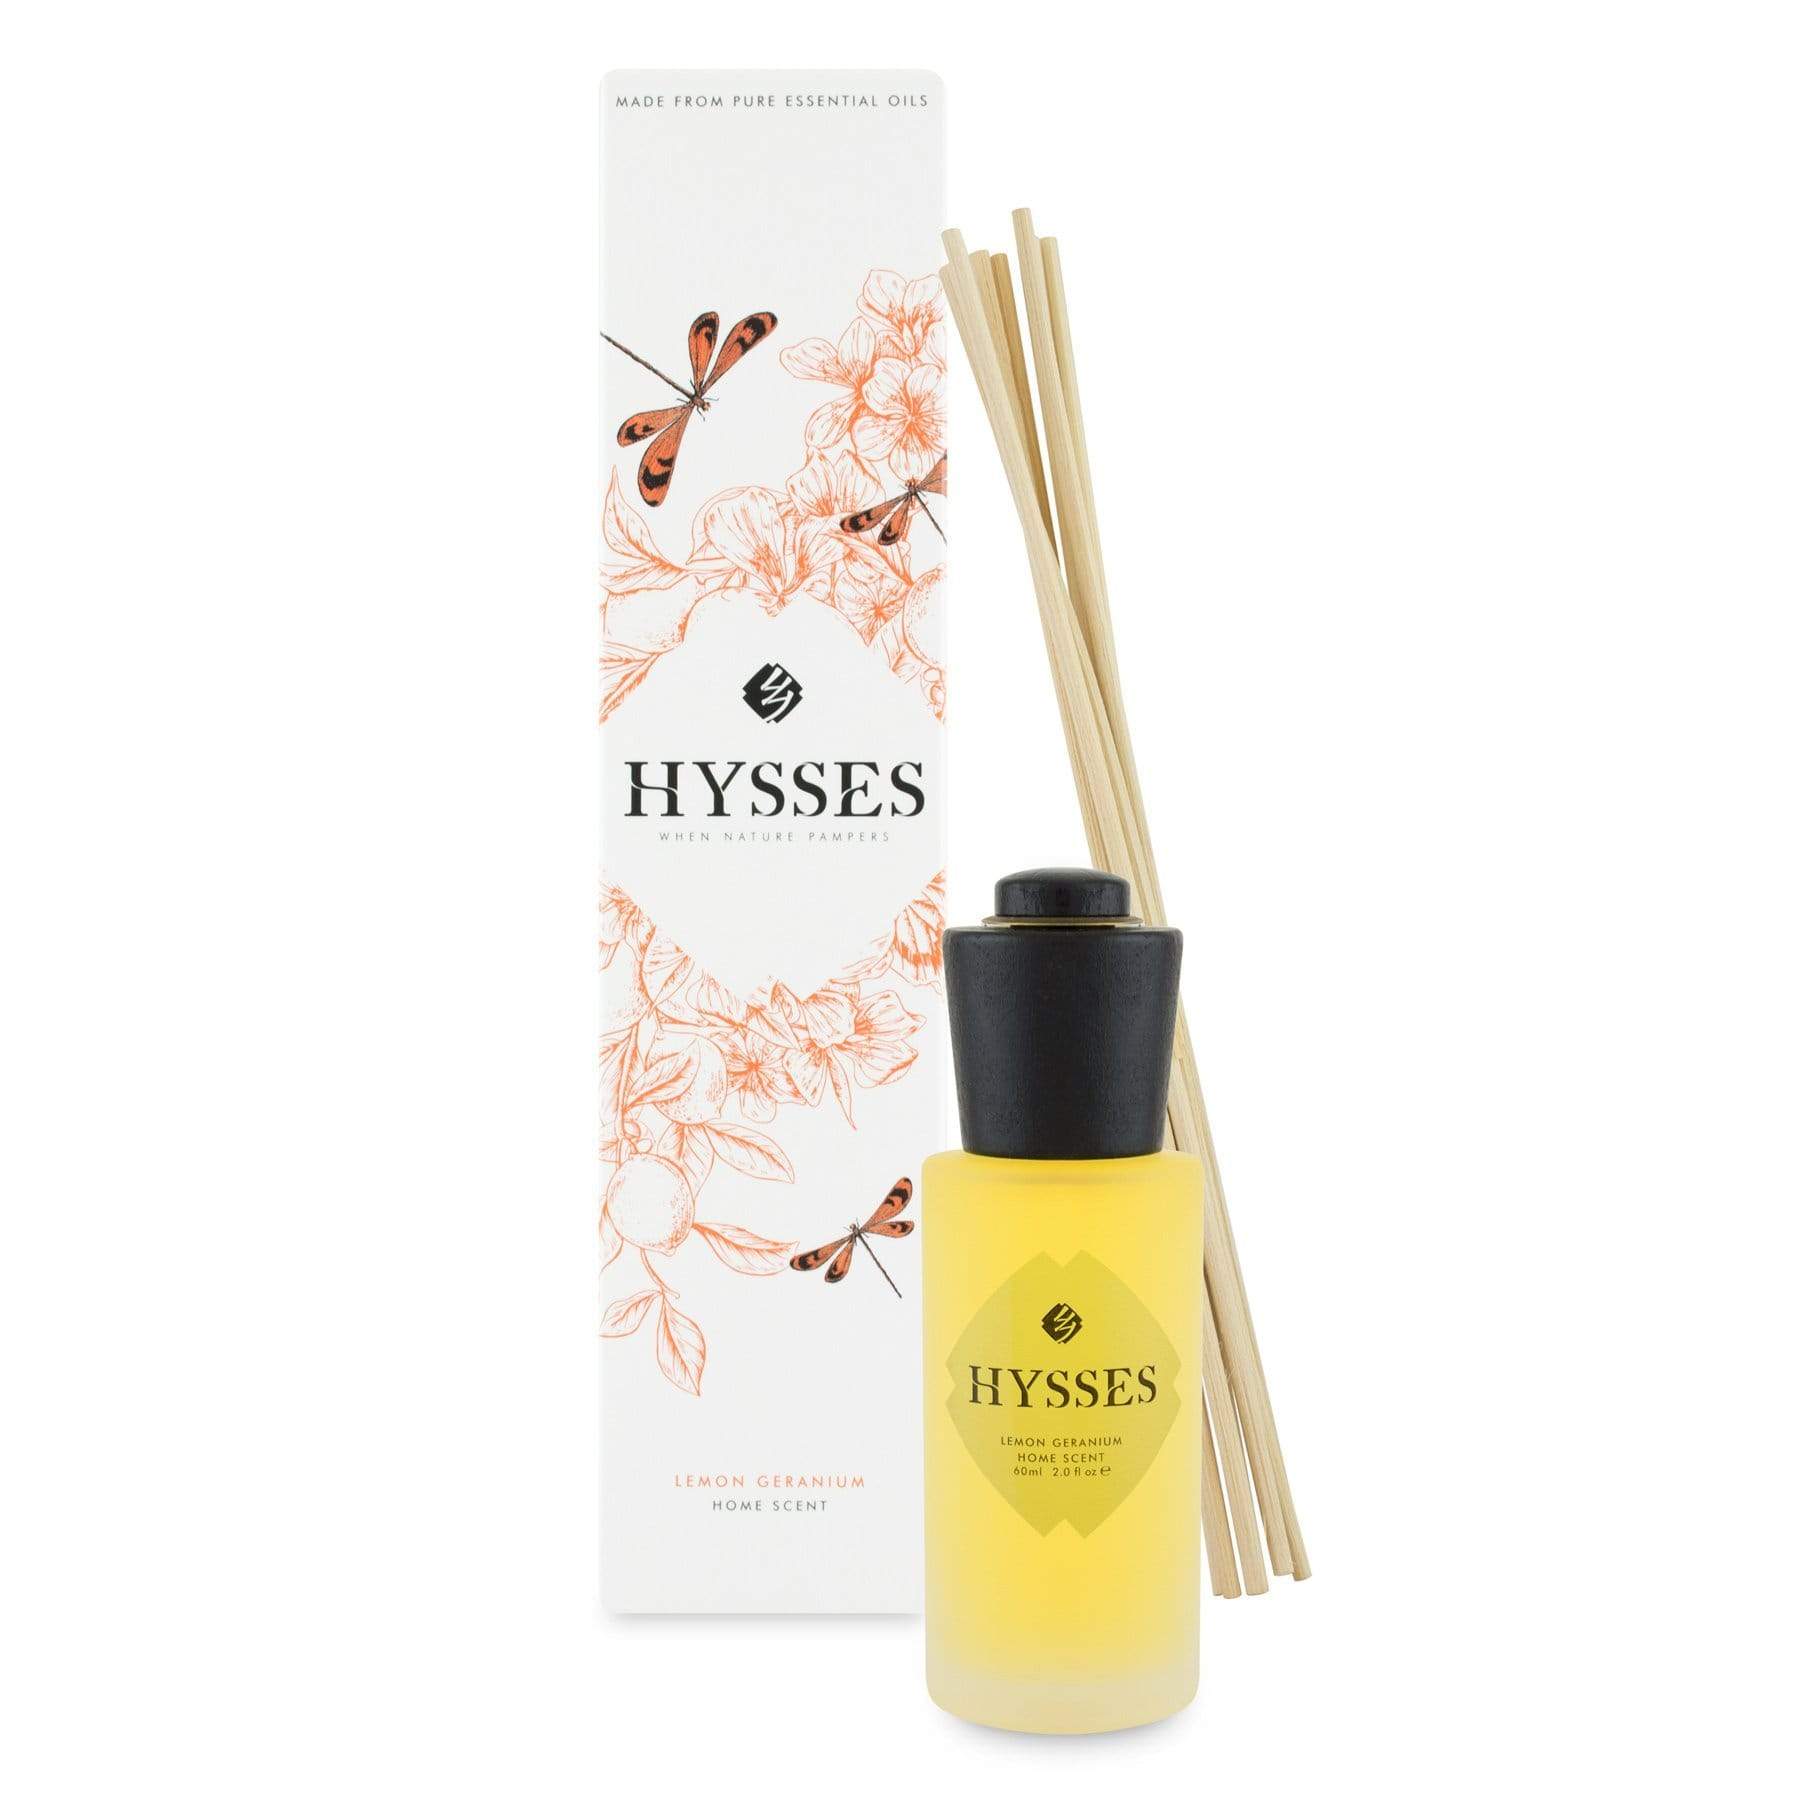 Hysses Home Scents 60ml Home Scent Reed Diffuser Lemon Geranium